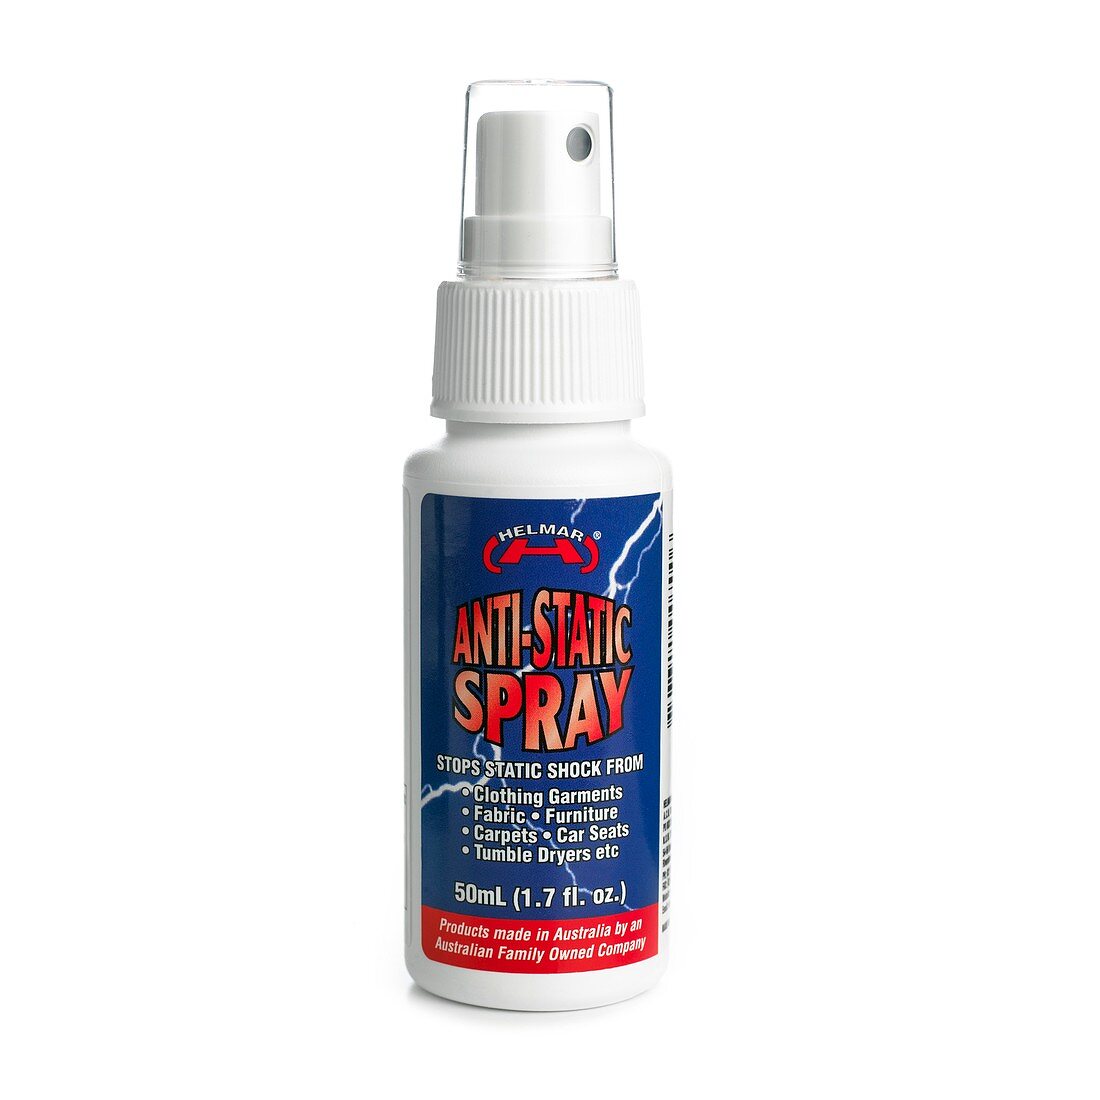 Anti-static spray